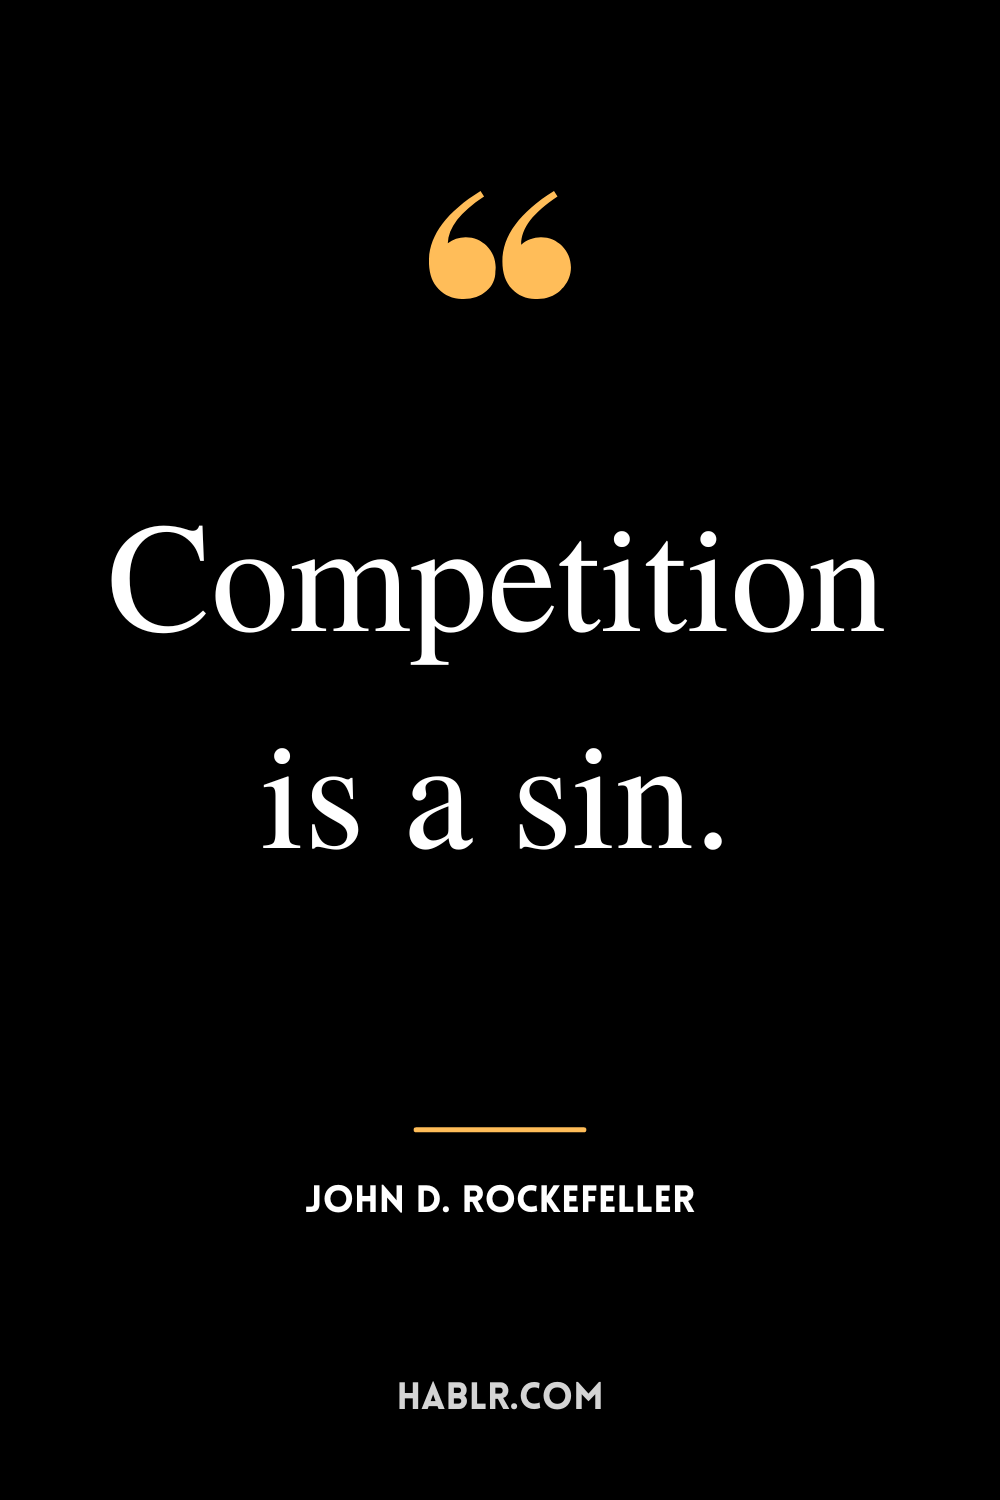 “Competition is a sin.” -John D. Rockefeller